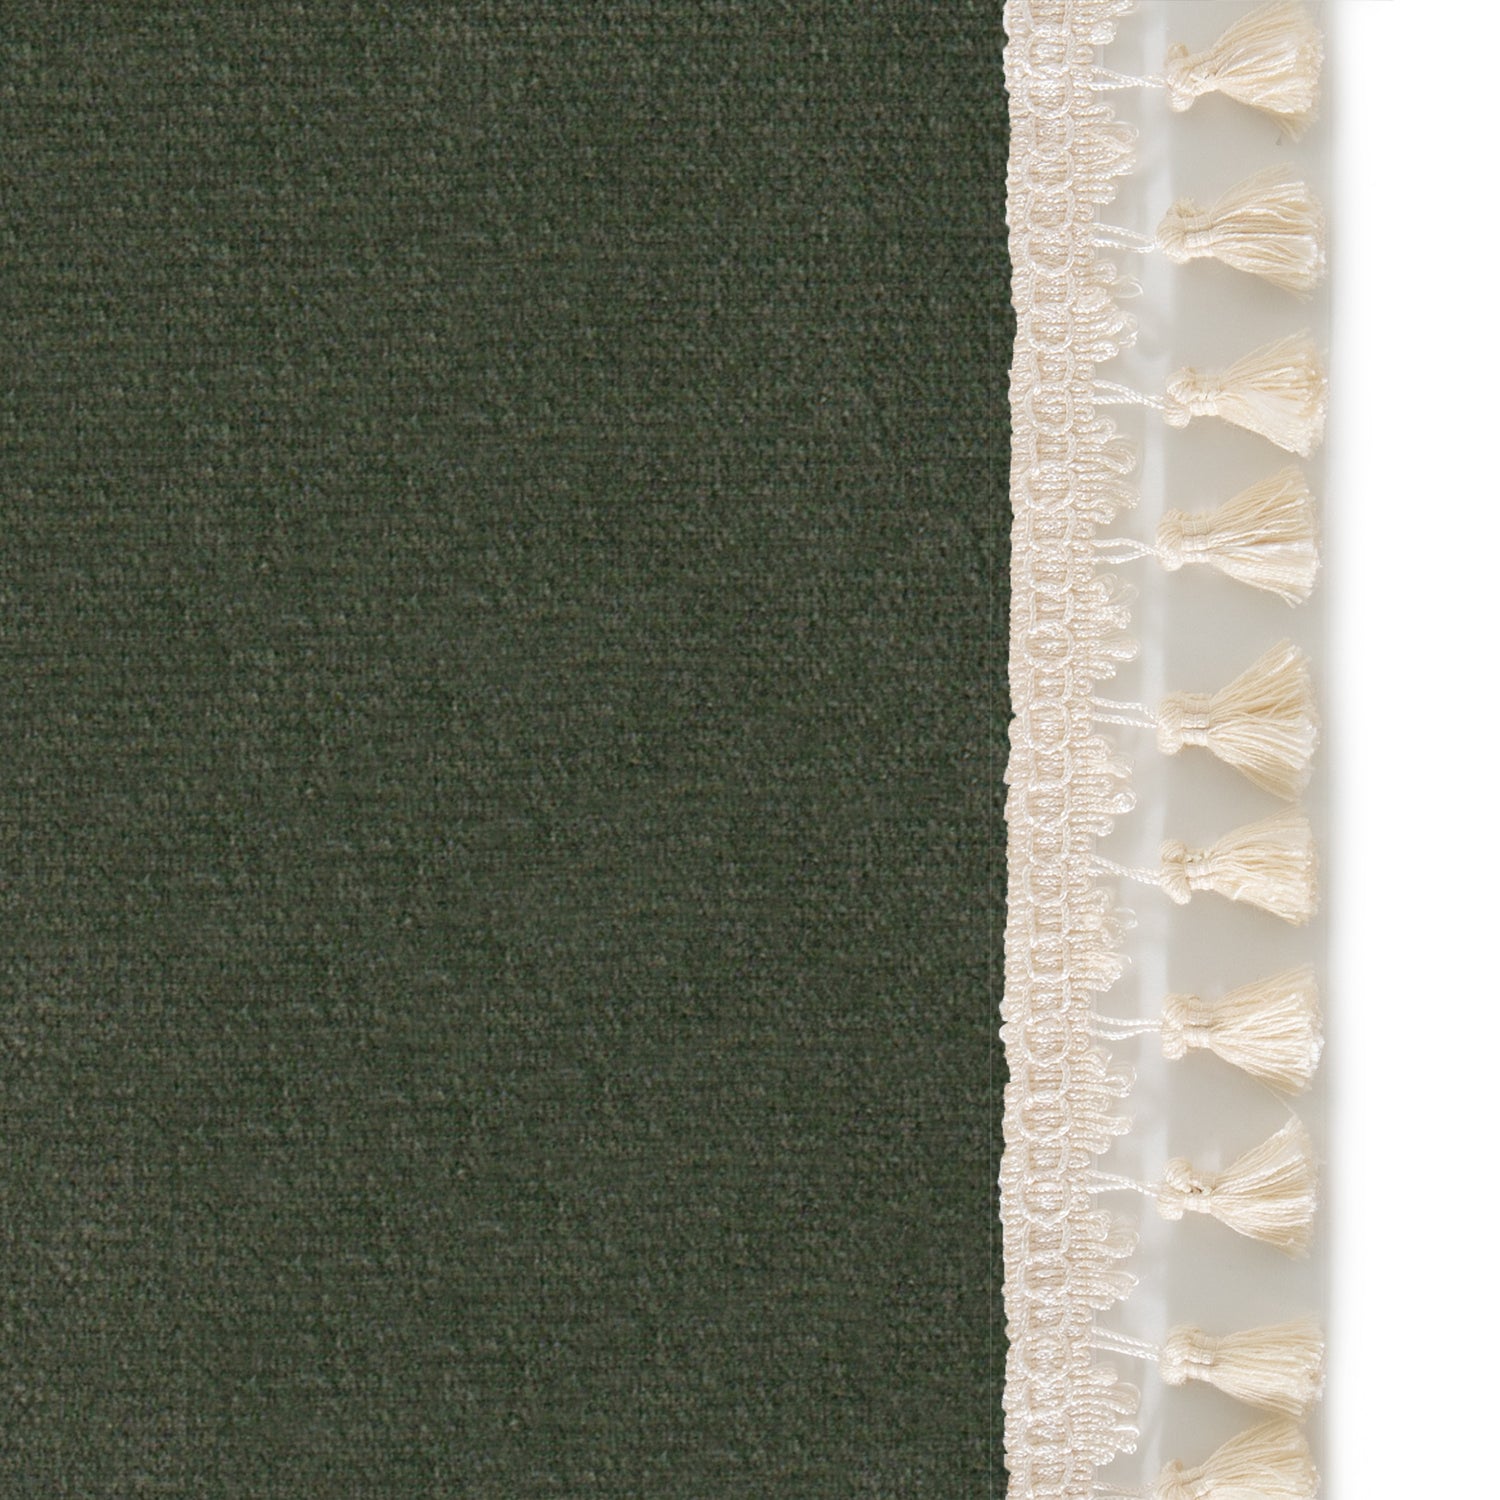 Upclose picture of Fern Velvet custom Fern Greencurtain with cream tassel trim